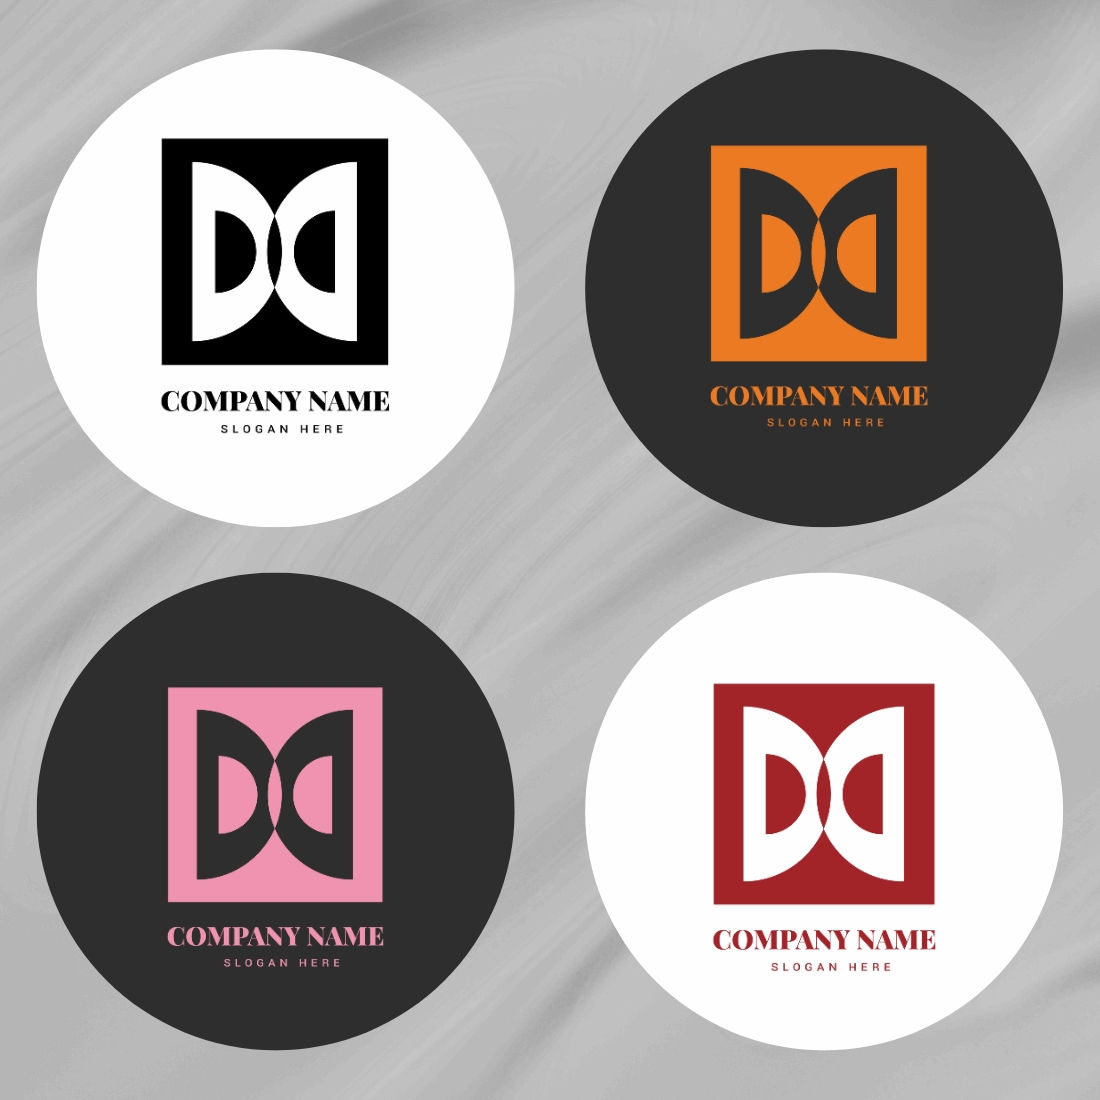 DD Monogram Logo [Sphinx Creatus] preview image.